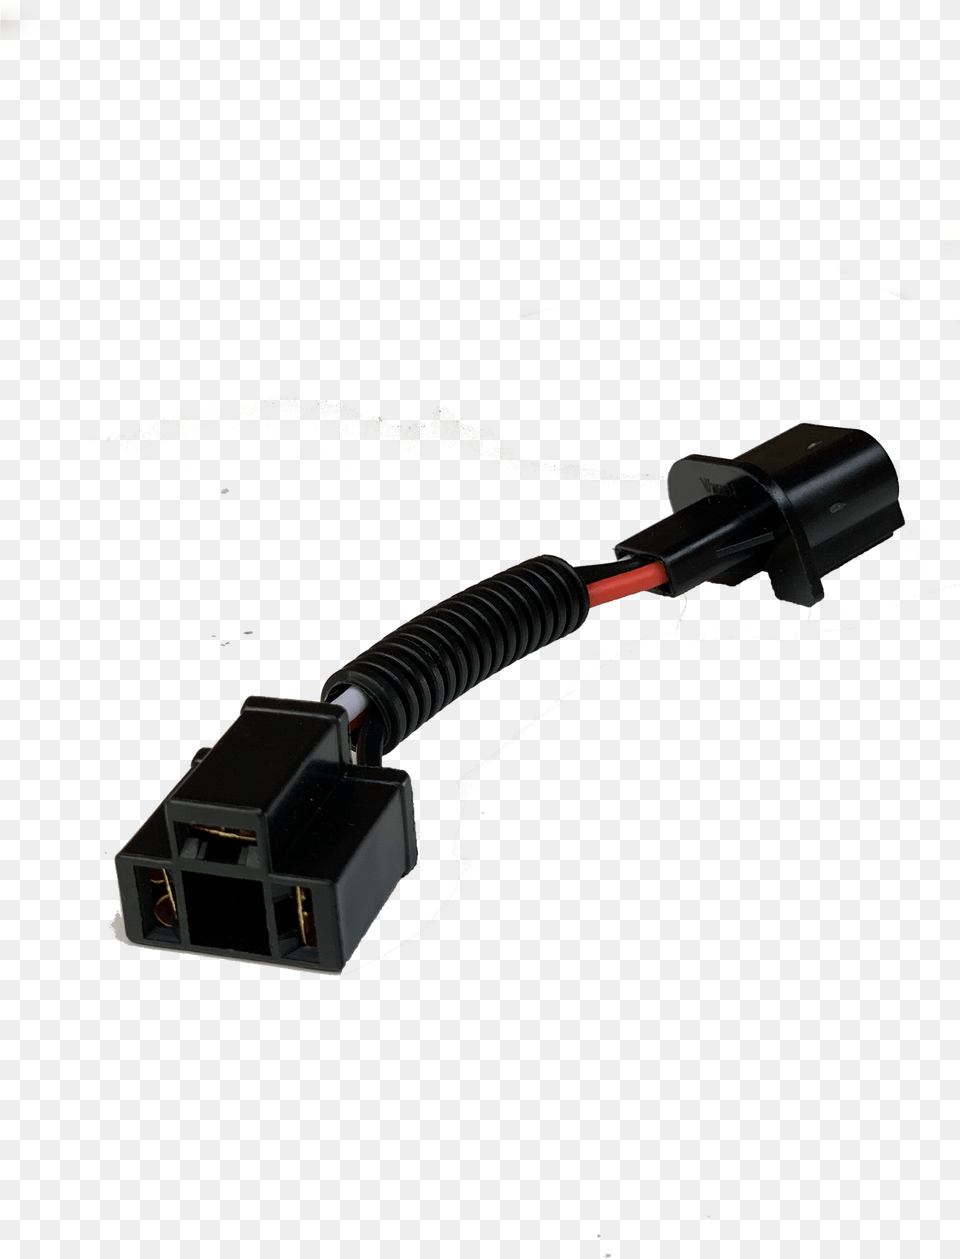 Inverter Wiring Boom Facelift Model Sprintprimavera Storage Cable, Adapter, Electronics, Smoke Pipe Png Image